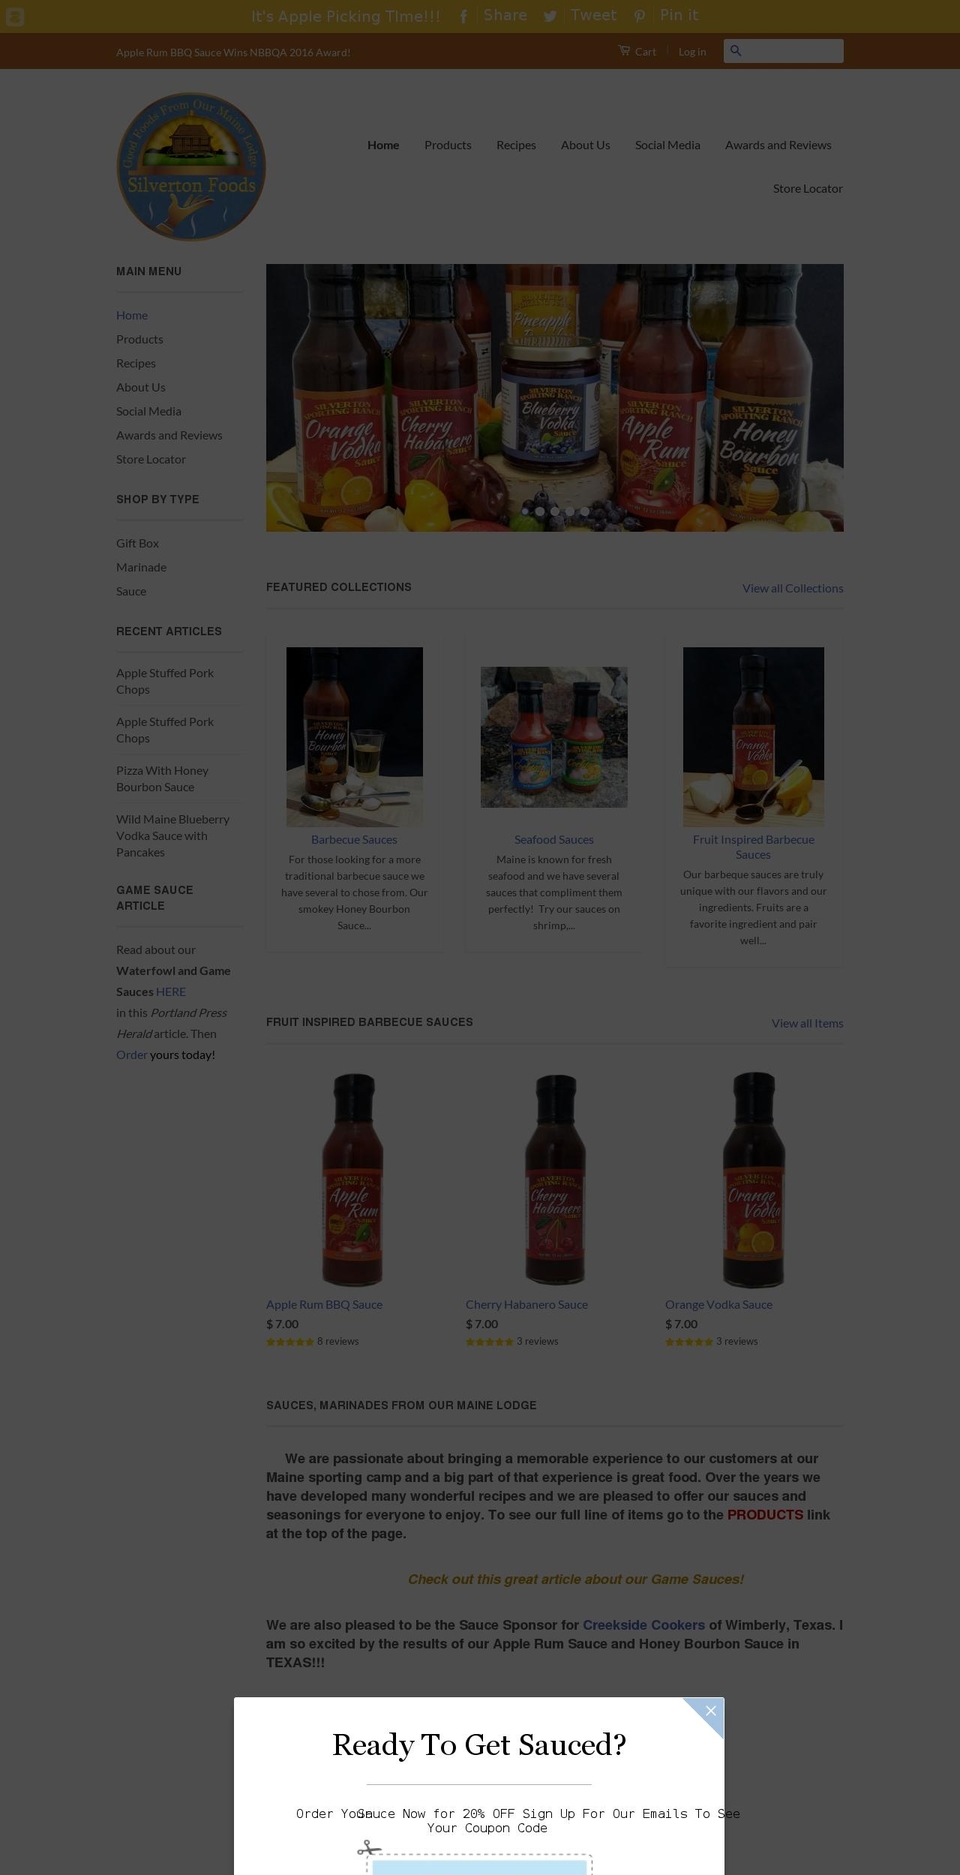 silvertonfoods.com shopify website screenshot